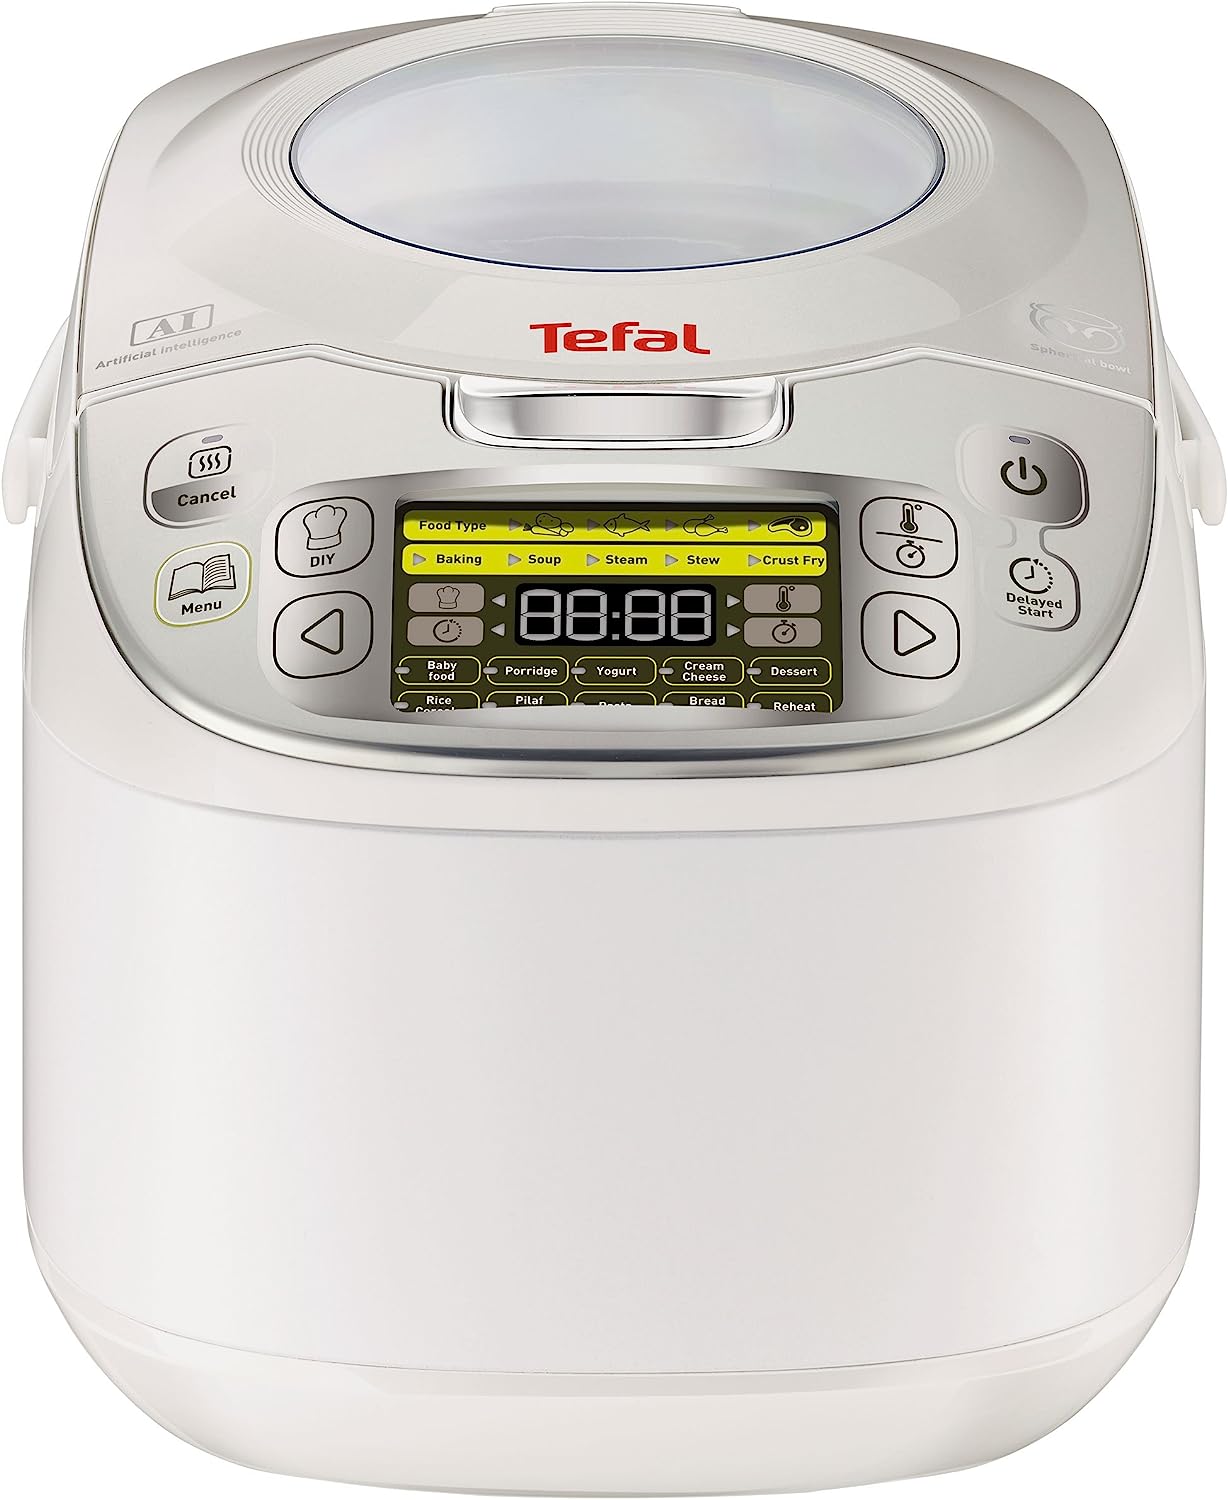 مولتی کوکر تفال مدل Tefal RK8121 multi cooker - ارسال الی 20 الی 25 روز کاری